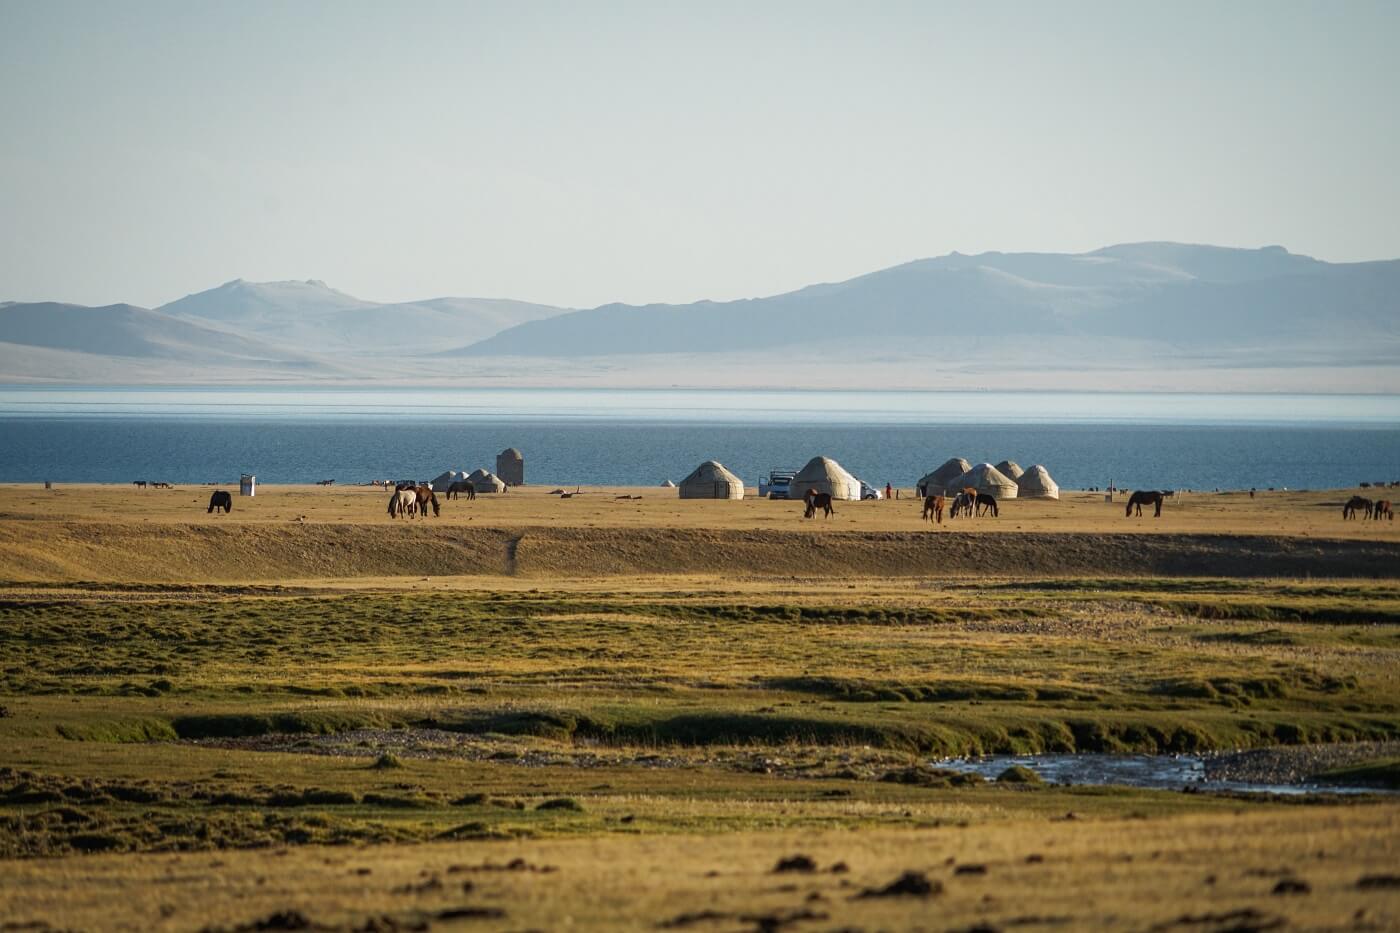 Song Kul lake in Kyrgyzstan with yurts